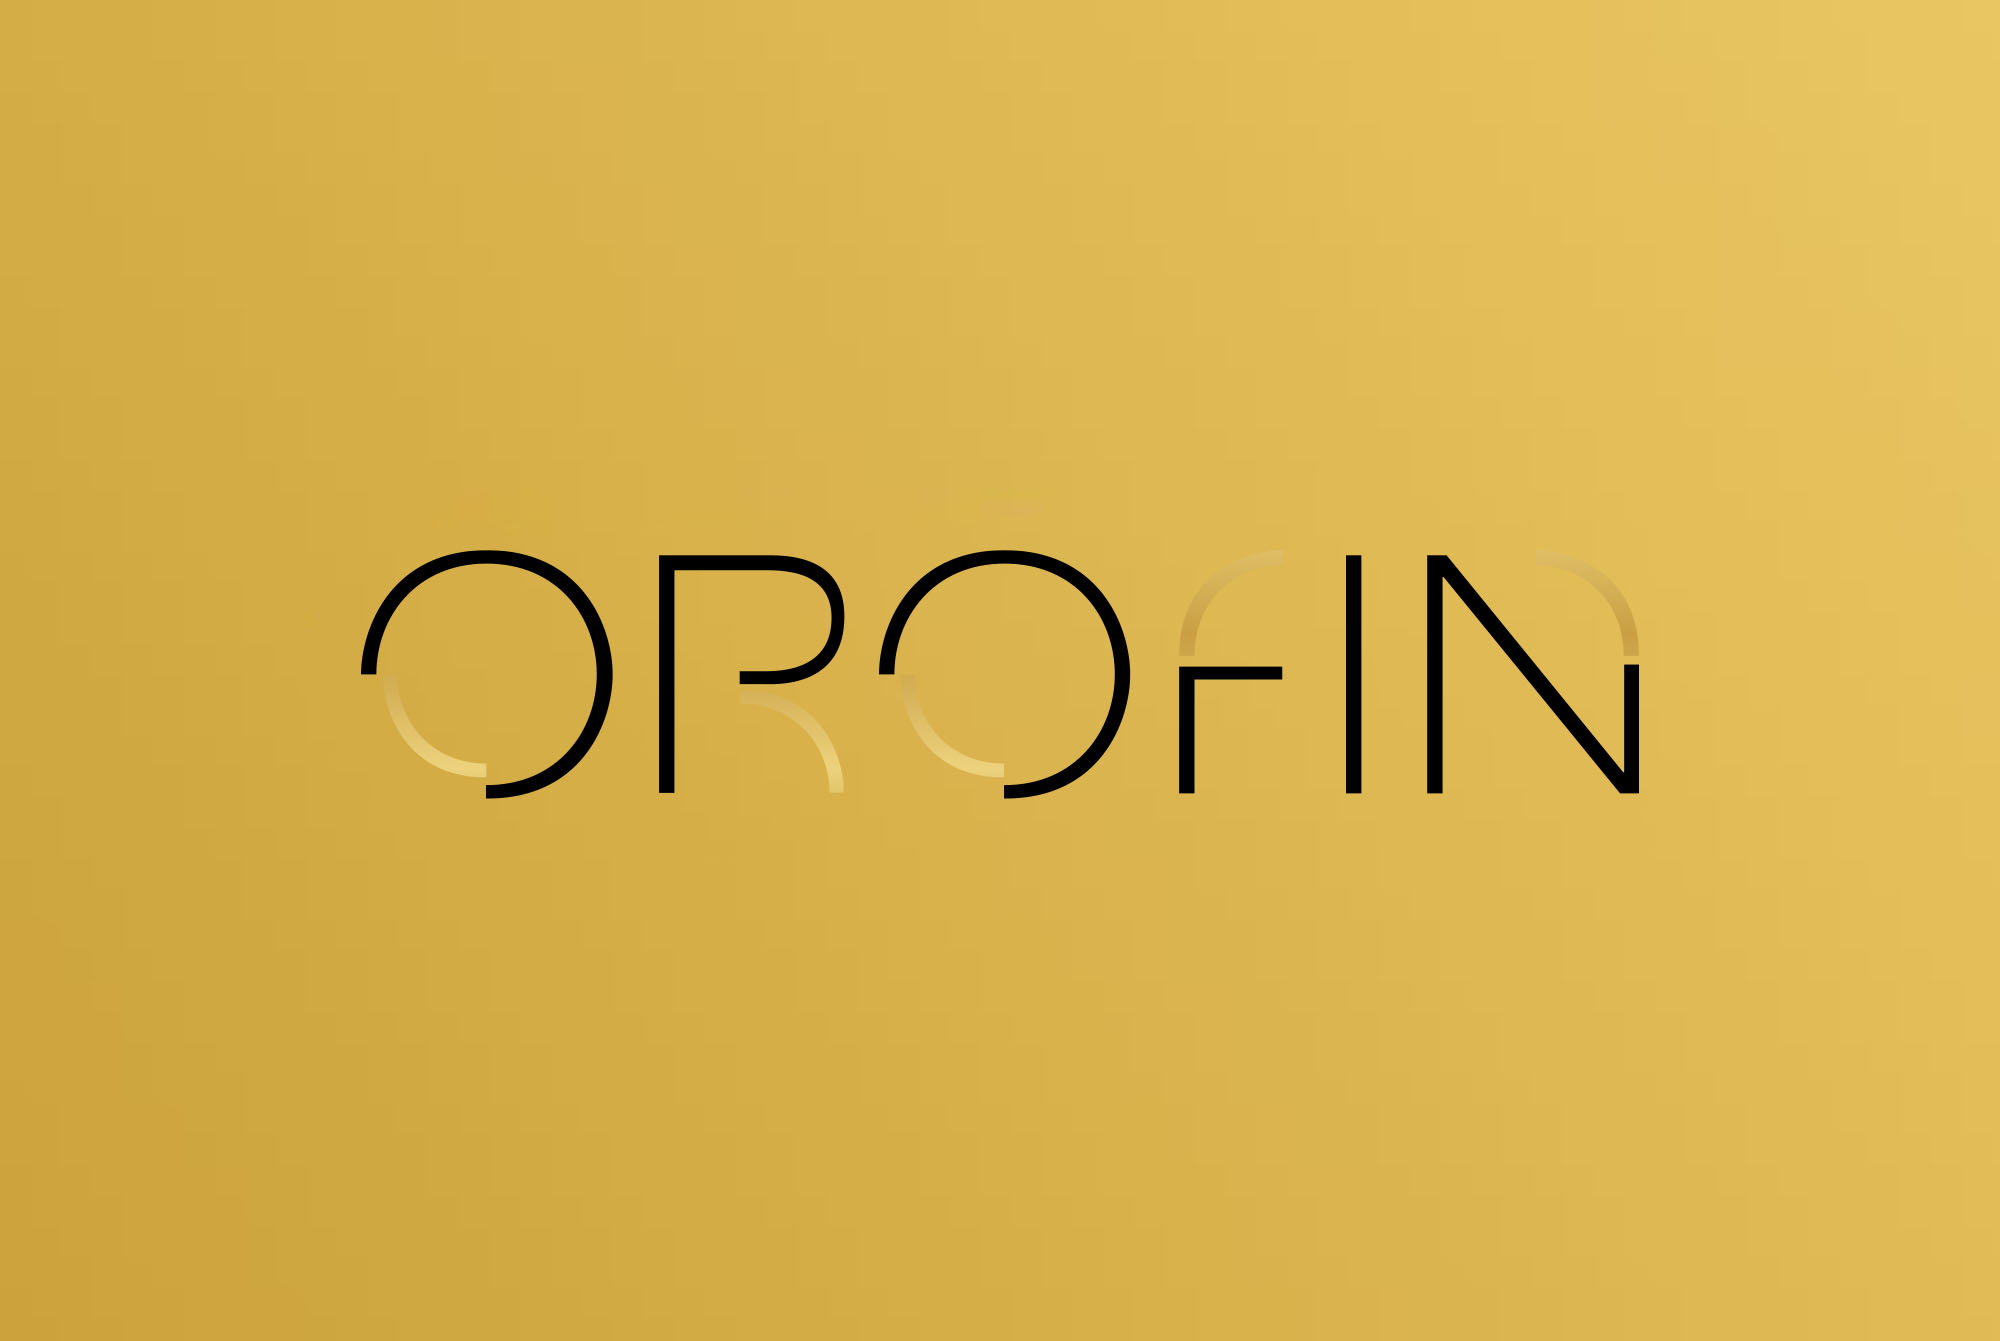 Orofin Logo Online Magazine from KURZ